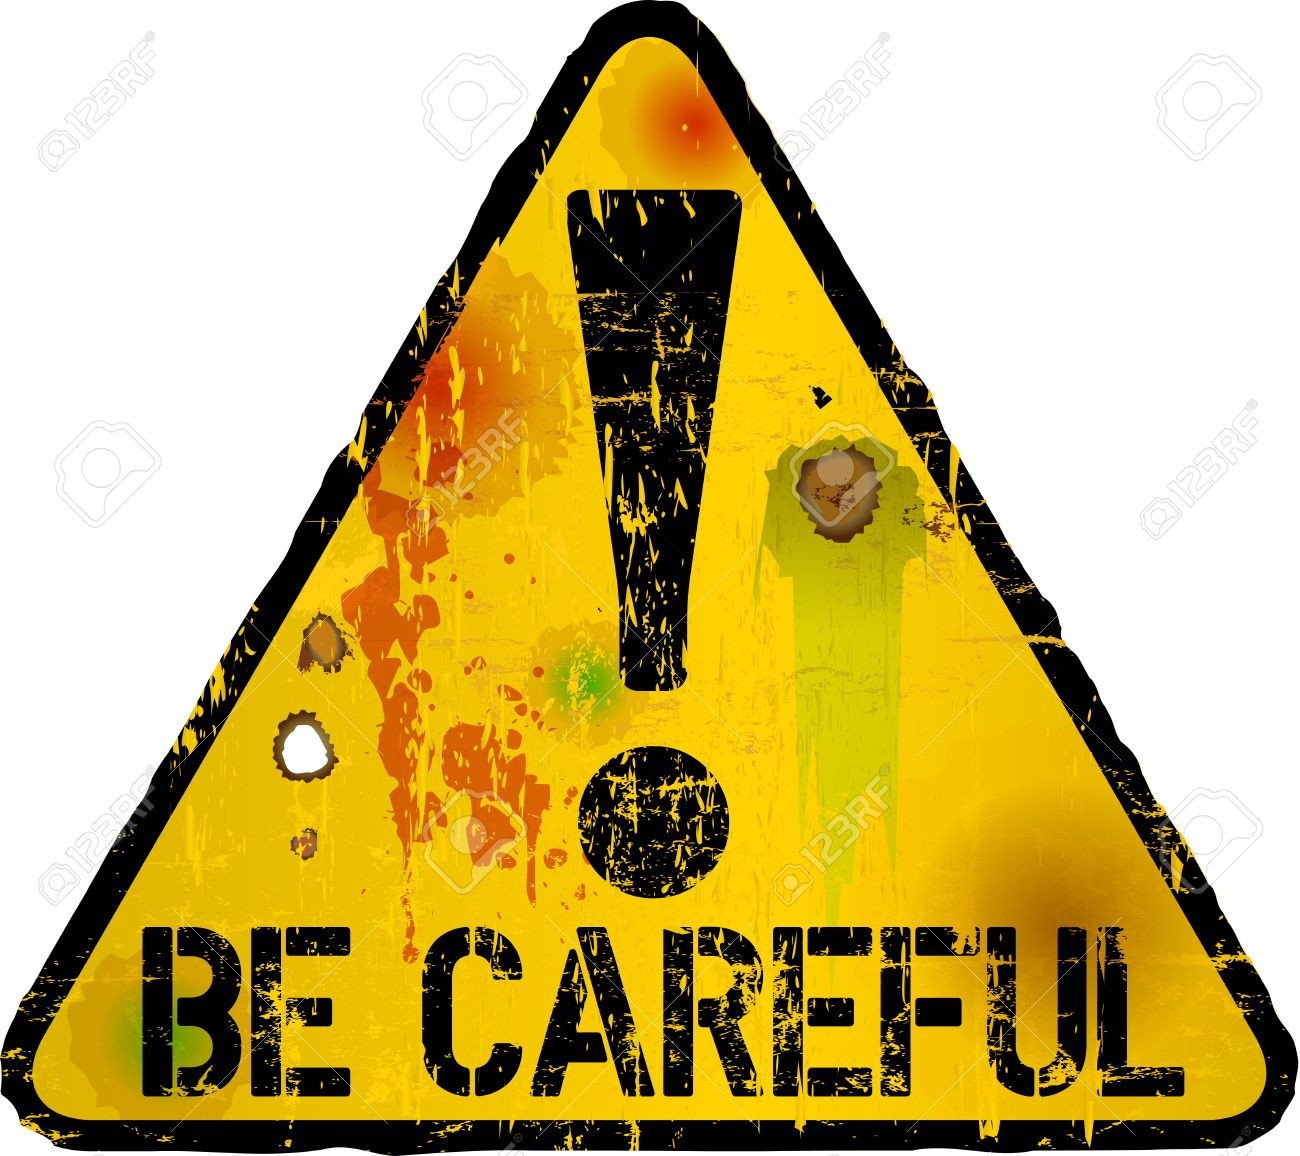 6-be-careful-sign-warning-sign-vector-illustration.jpg